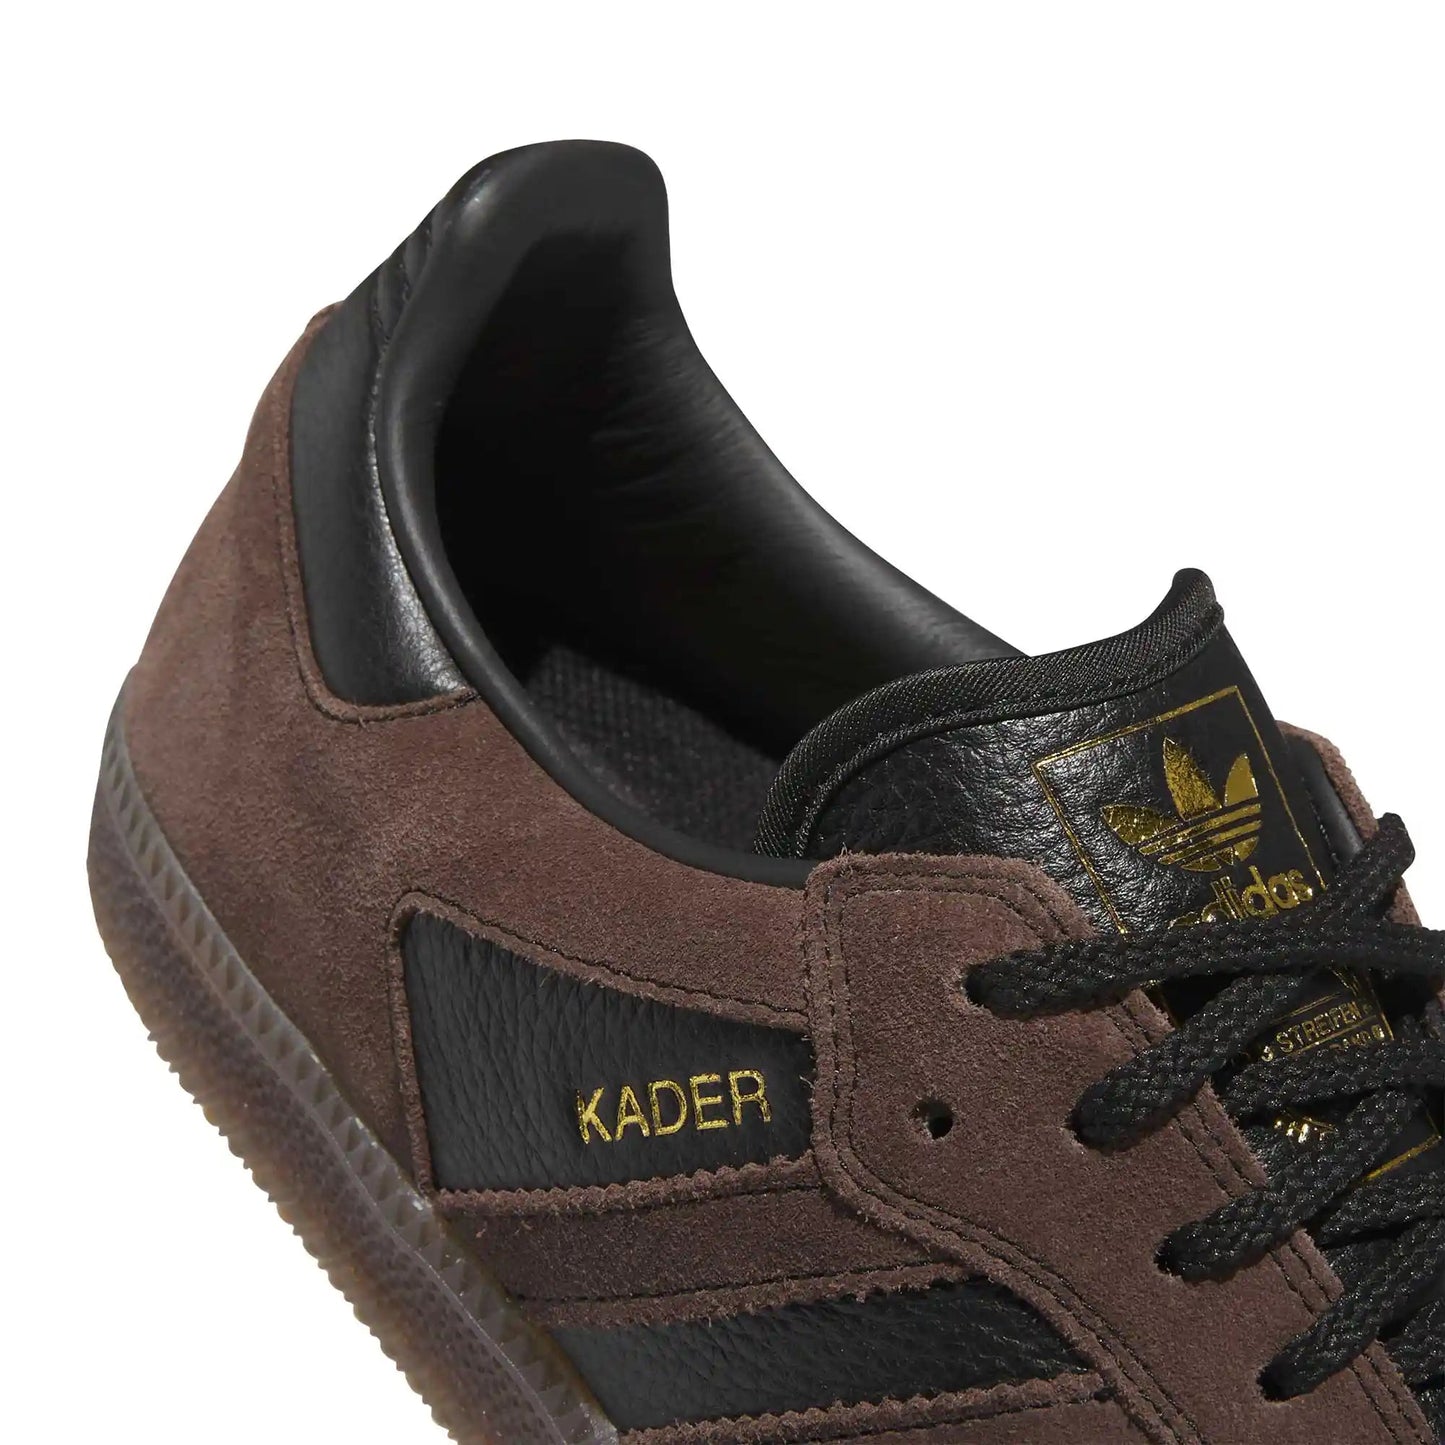 Adidas Samba ADV X Kader, core black/brown/gum - Tiki Room Skateboards - 6